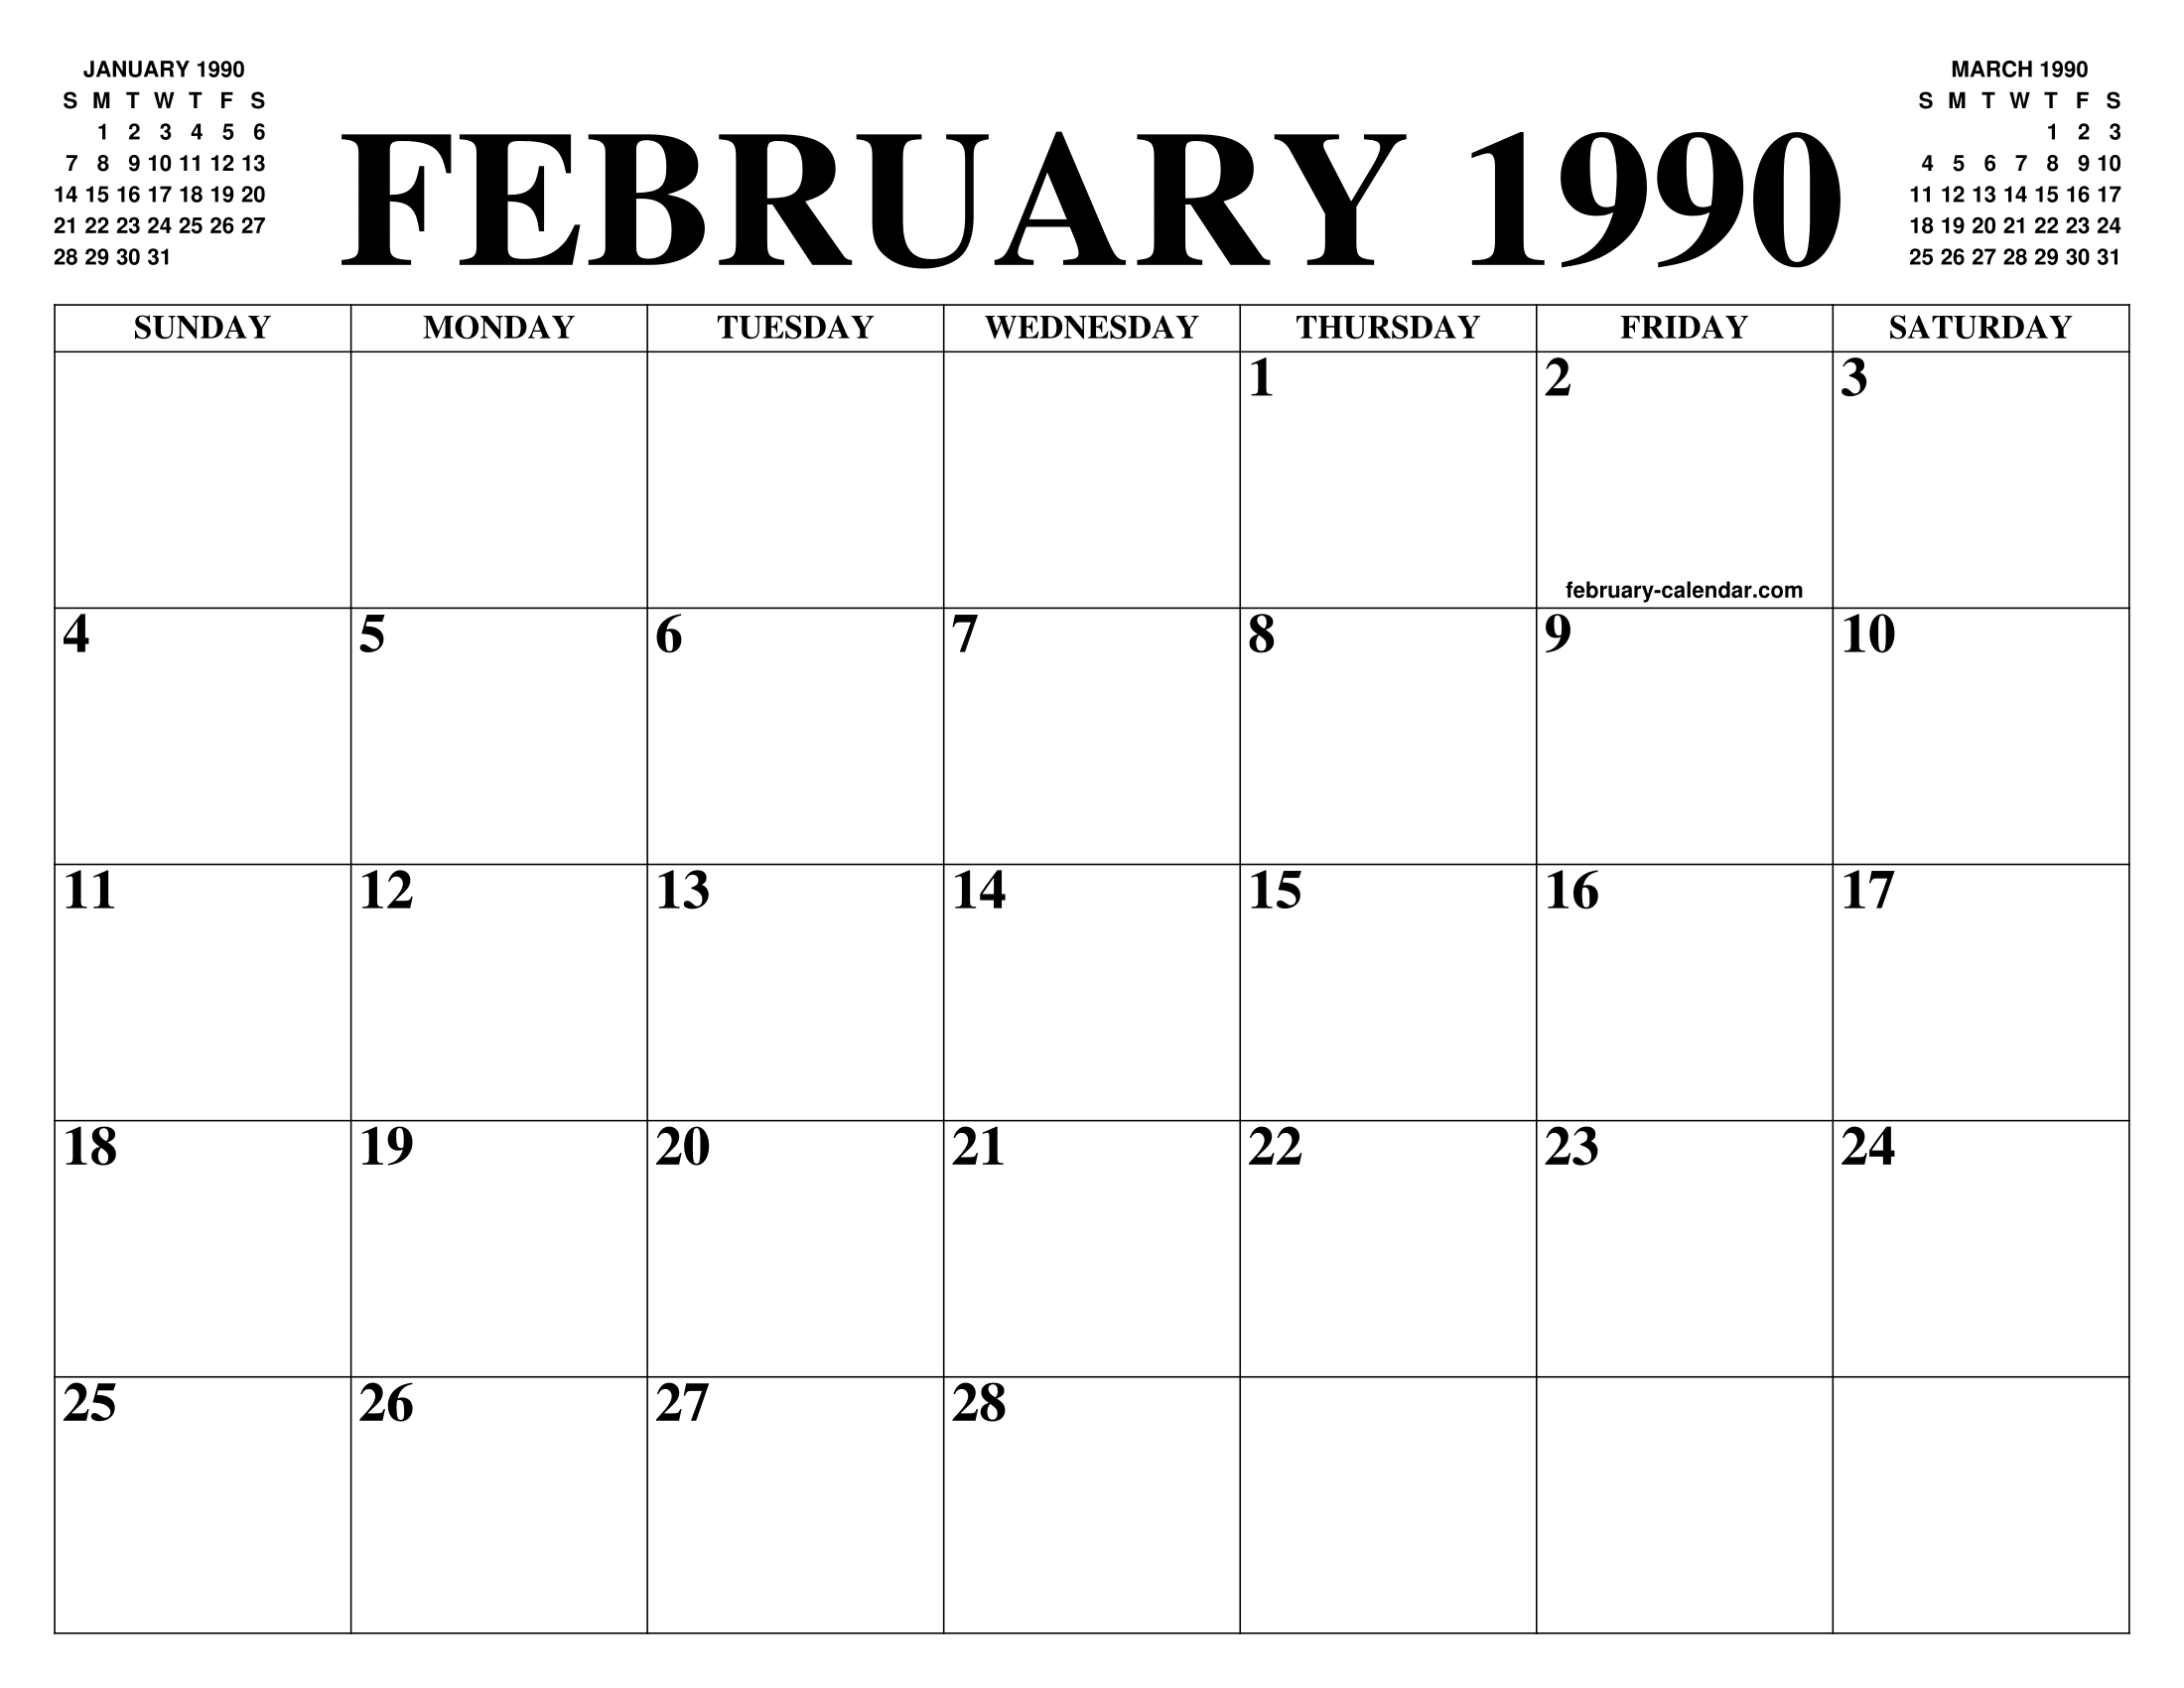 FEBRUARY 1990 CALENDAR OF THE MONTH: FREE PRINTABLE FEBRUARY CALENDAR